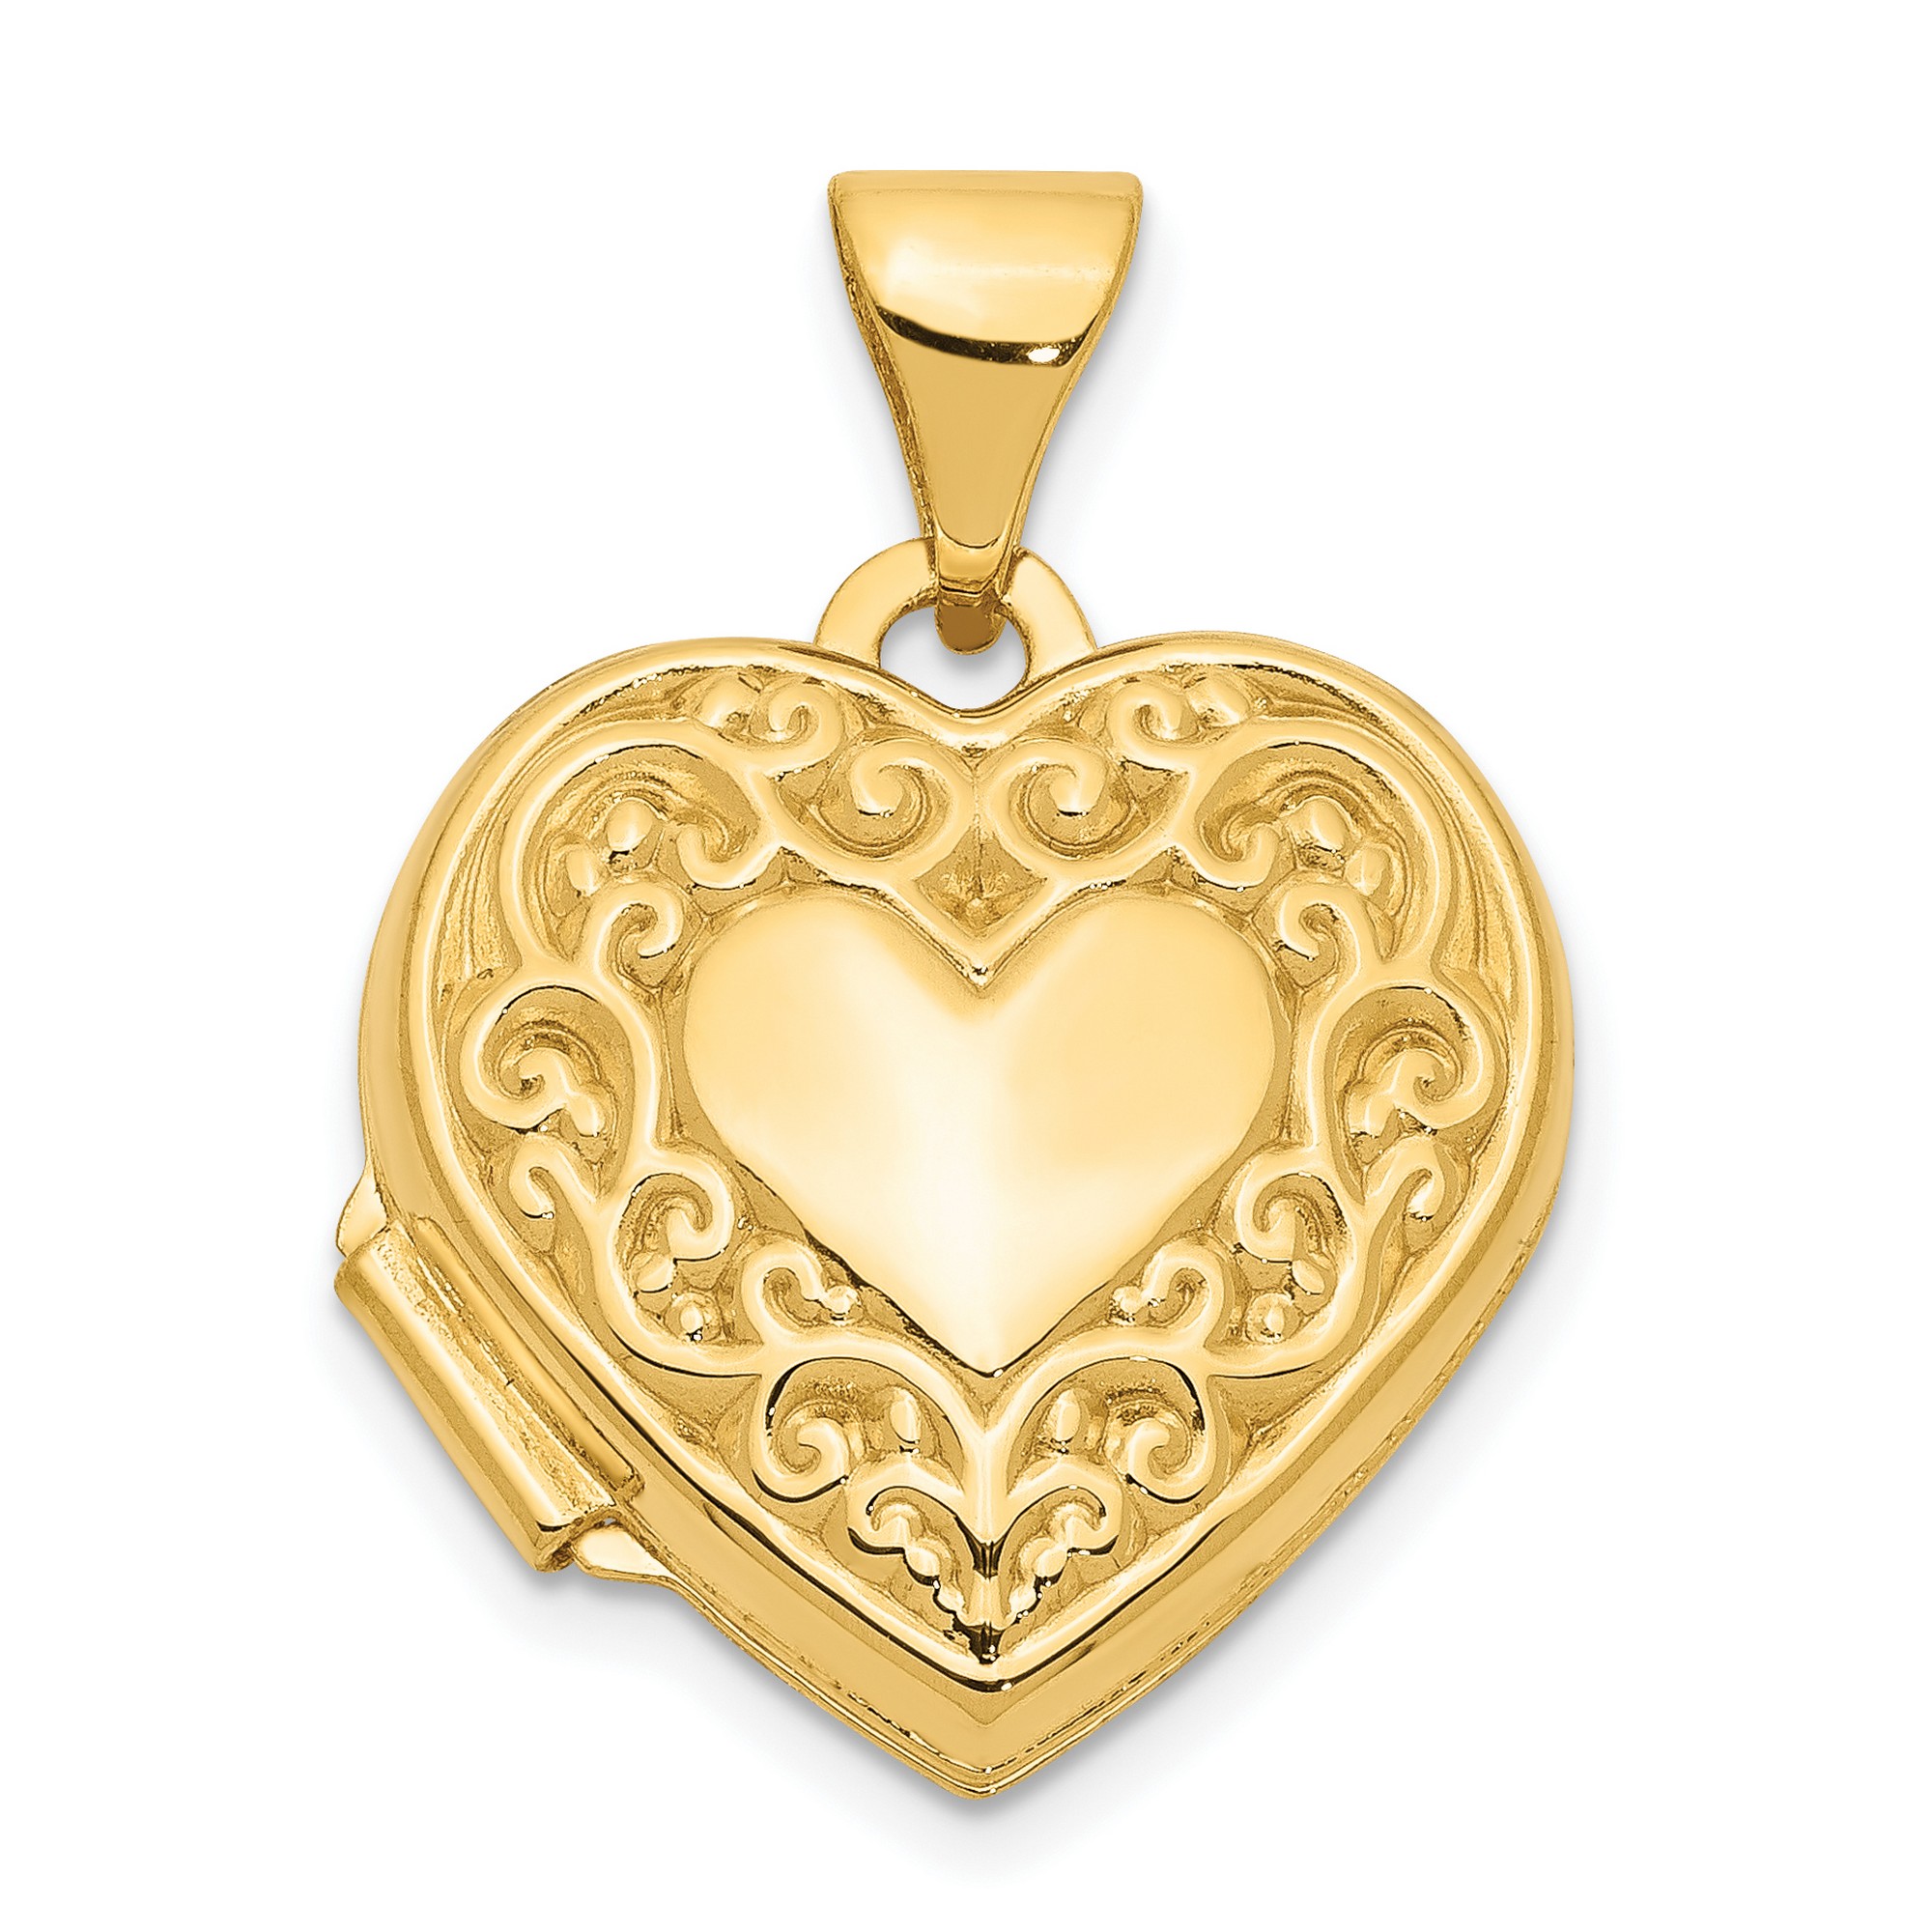 14K YELLOW GOLD Scroll Heart Locket $135.99 - PicClick